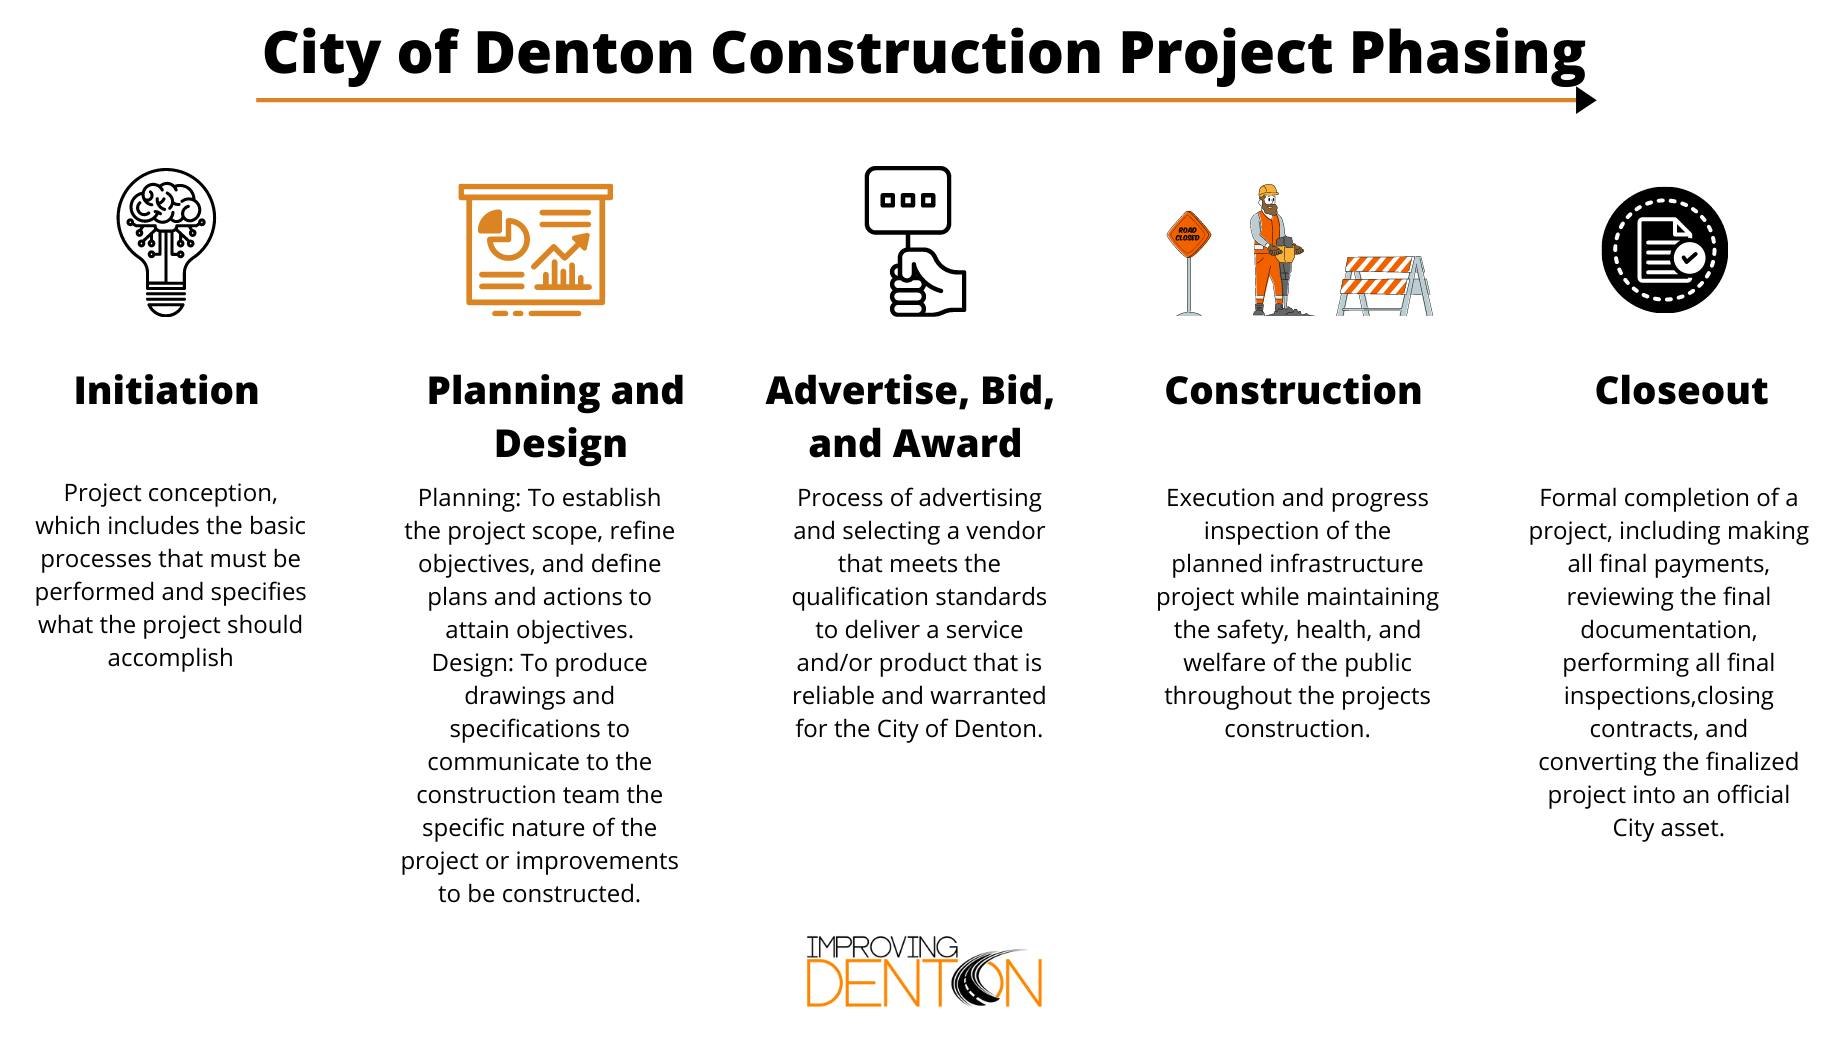 City of Denton Construction Project Phasing through 2024